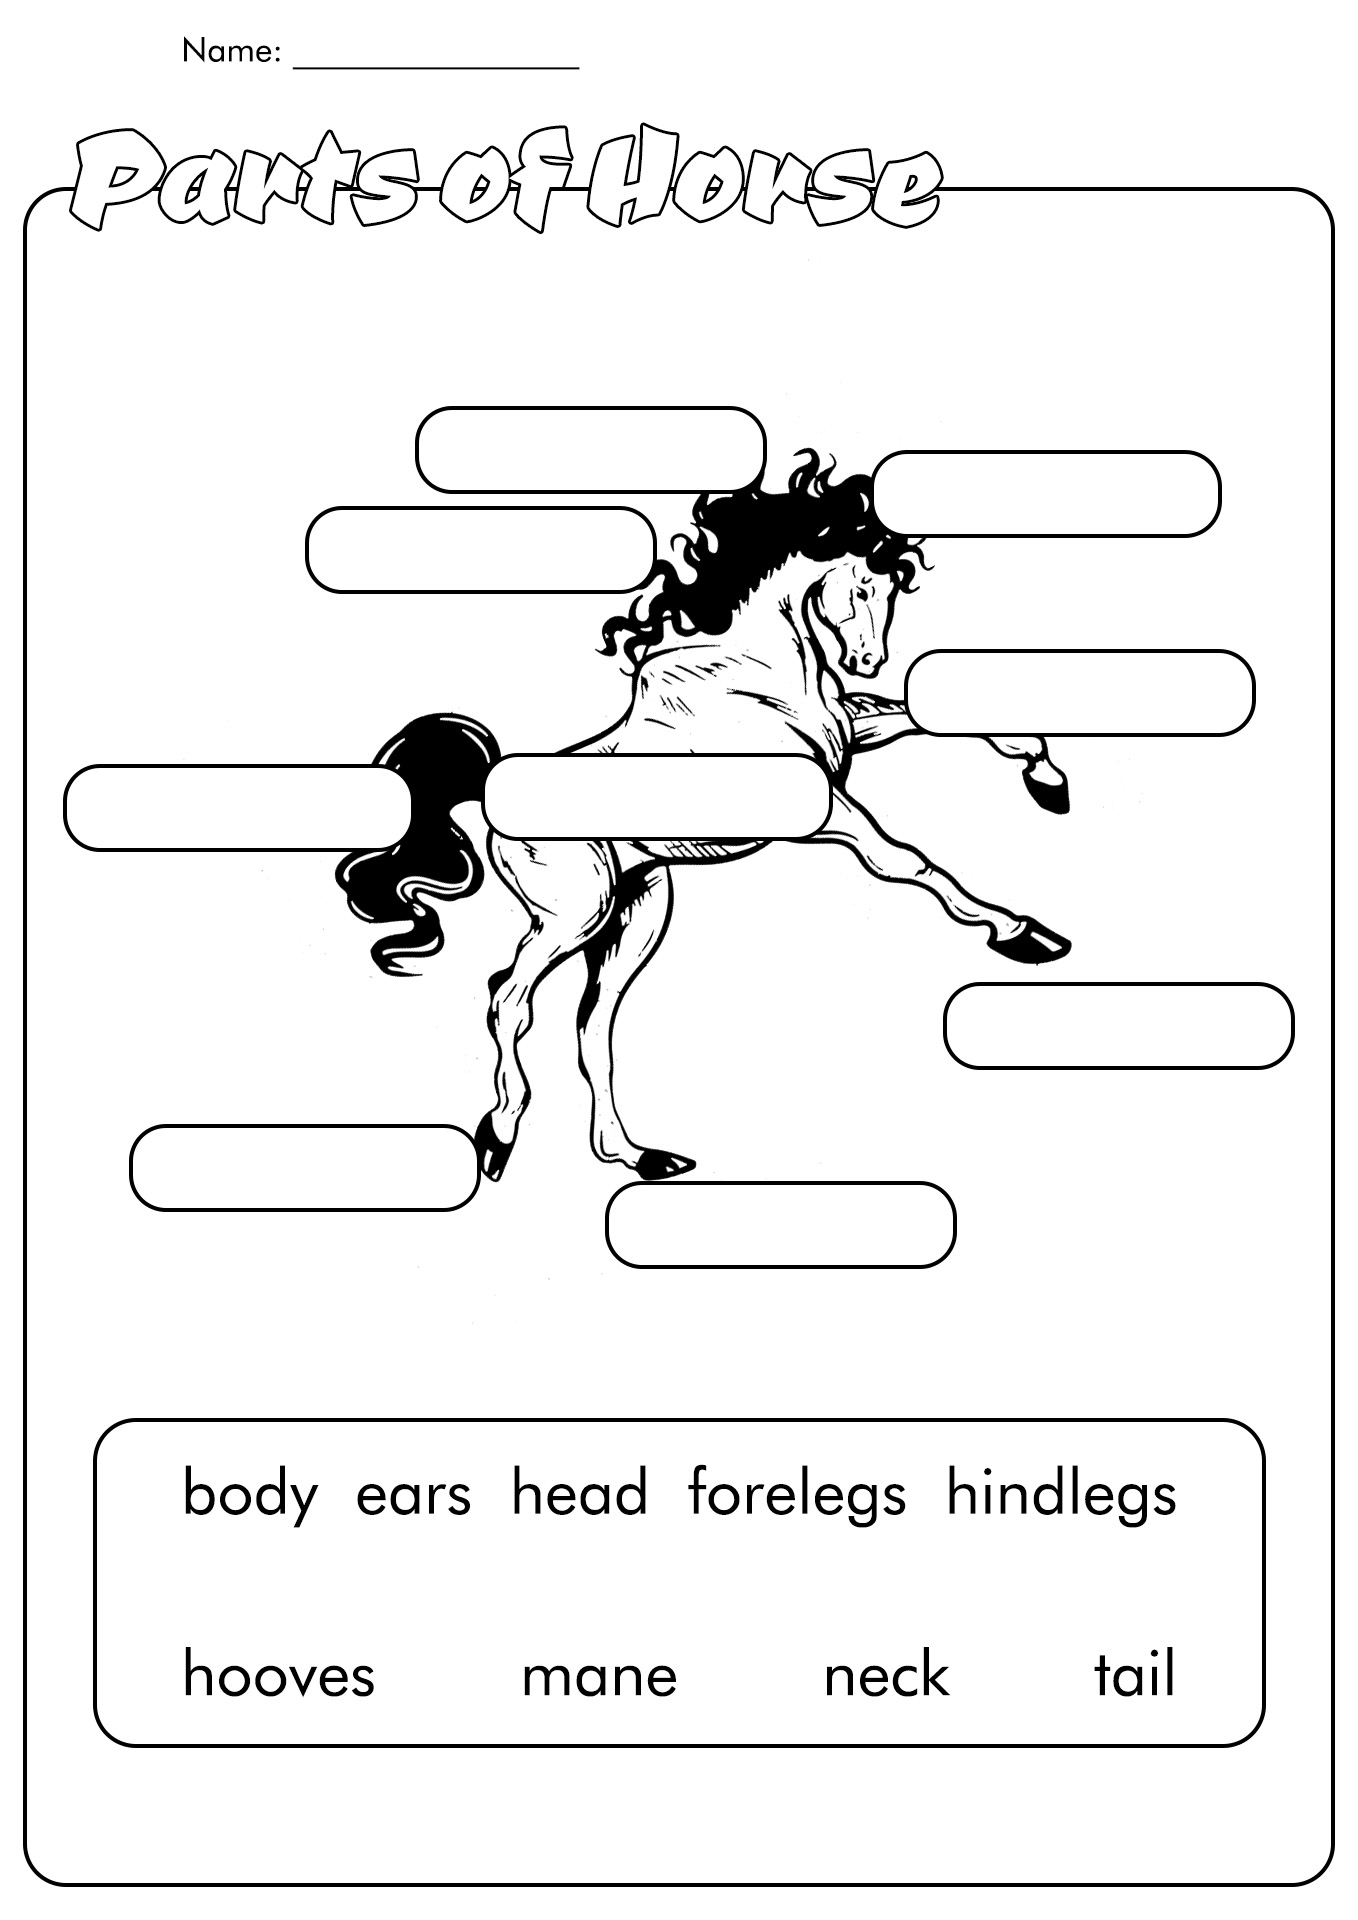 Horse Worksheets Printable Image